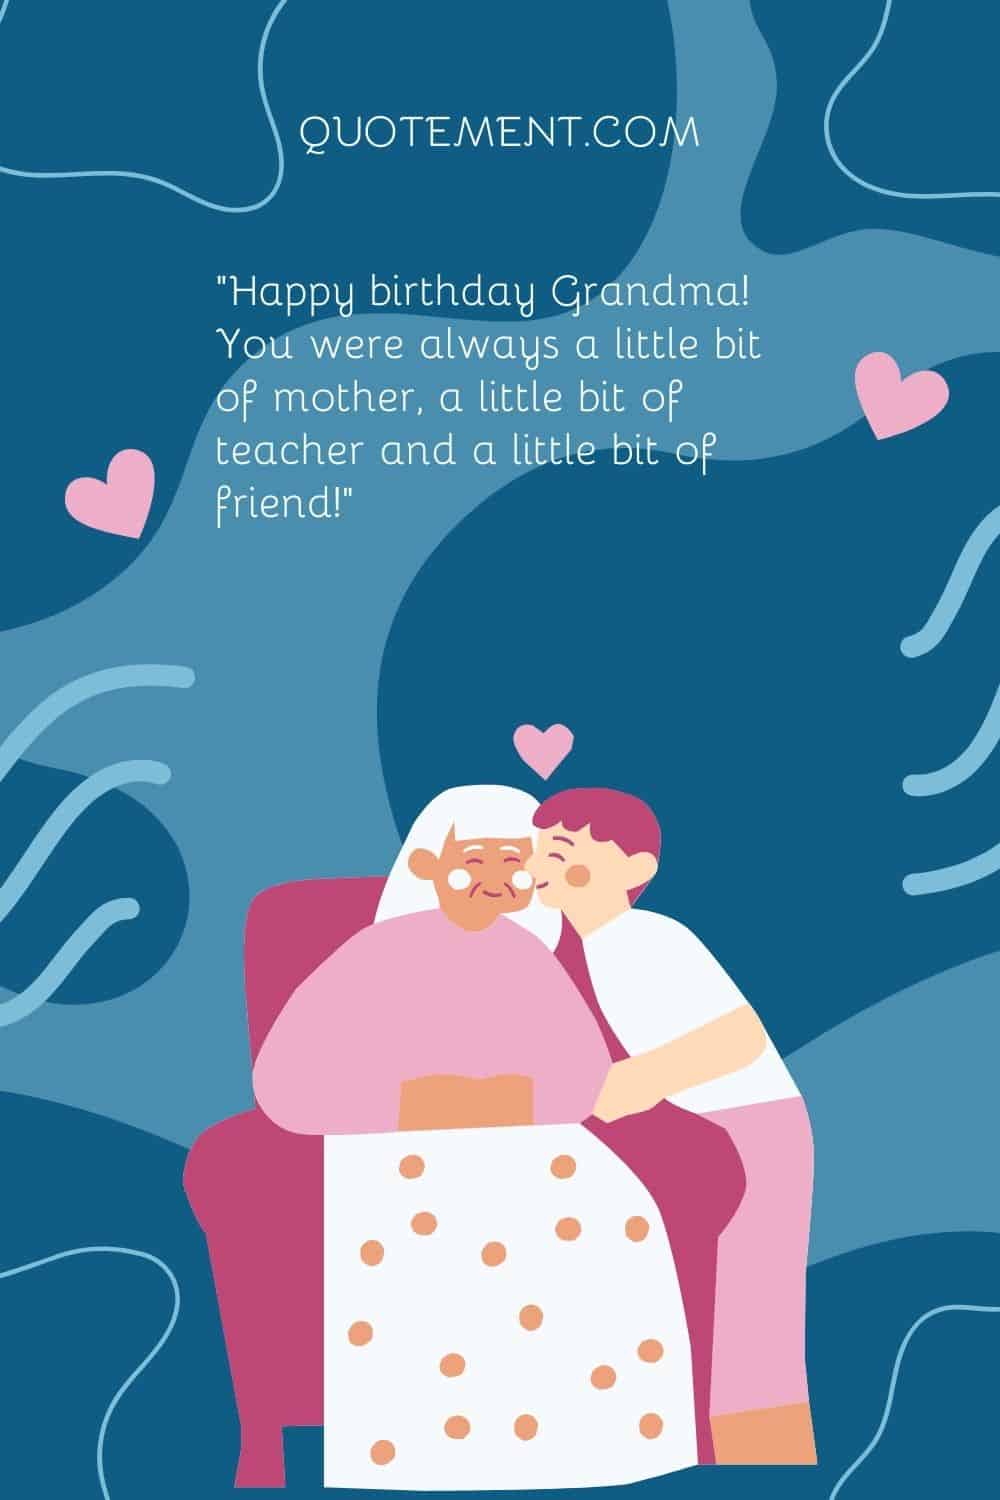 Happy birthday Grandma